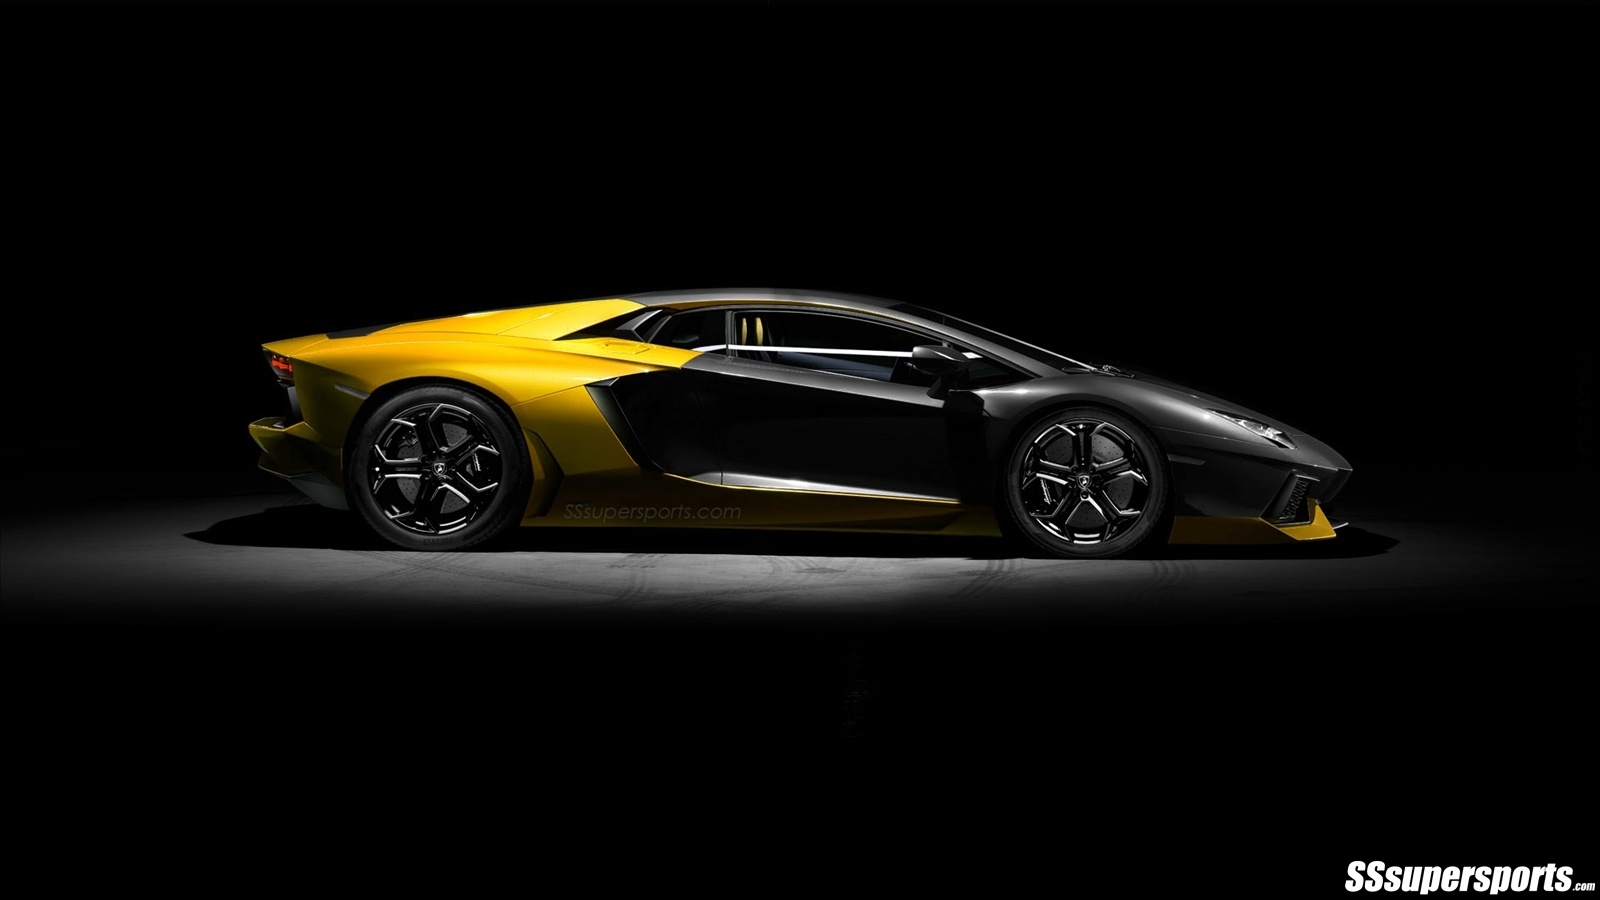 Black And Yellow Lamborghini Wallpaper Cool